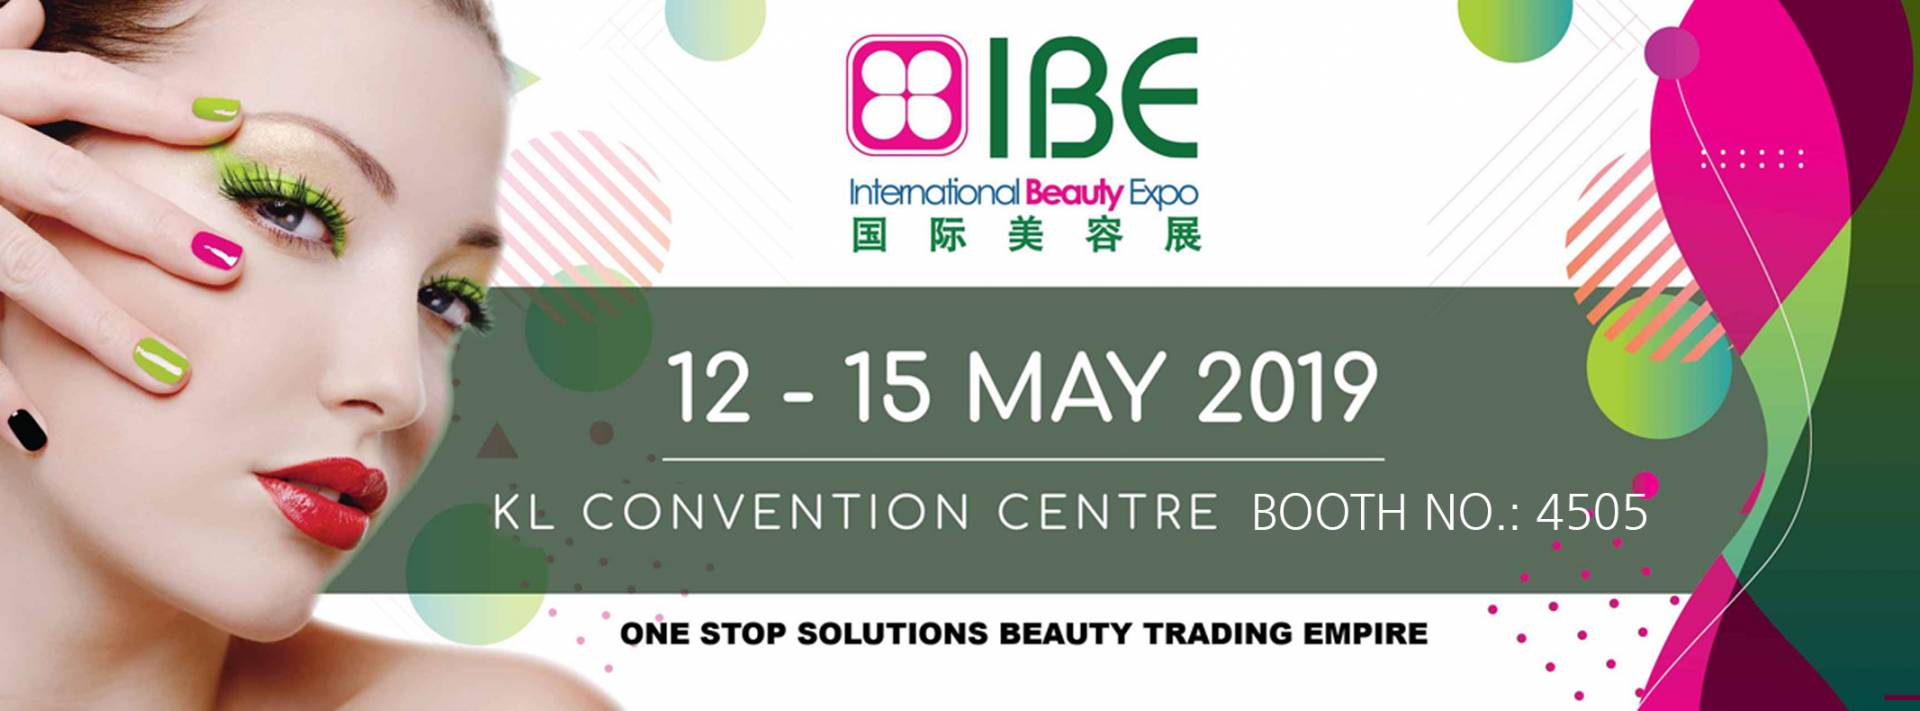 Internationale Beauty Expo Maleisië 2019